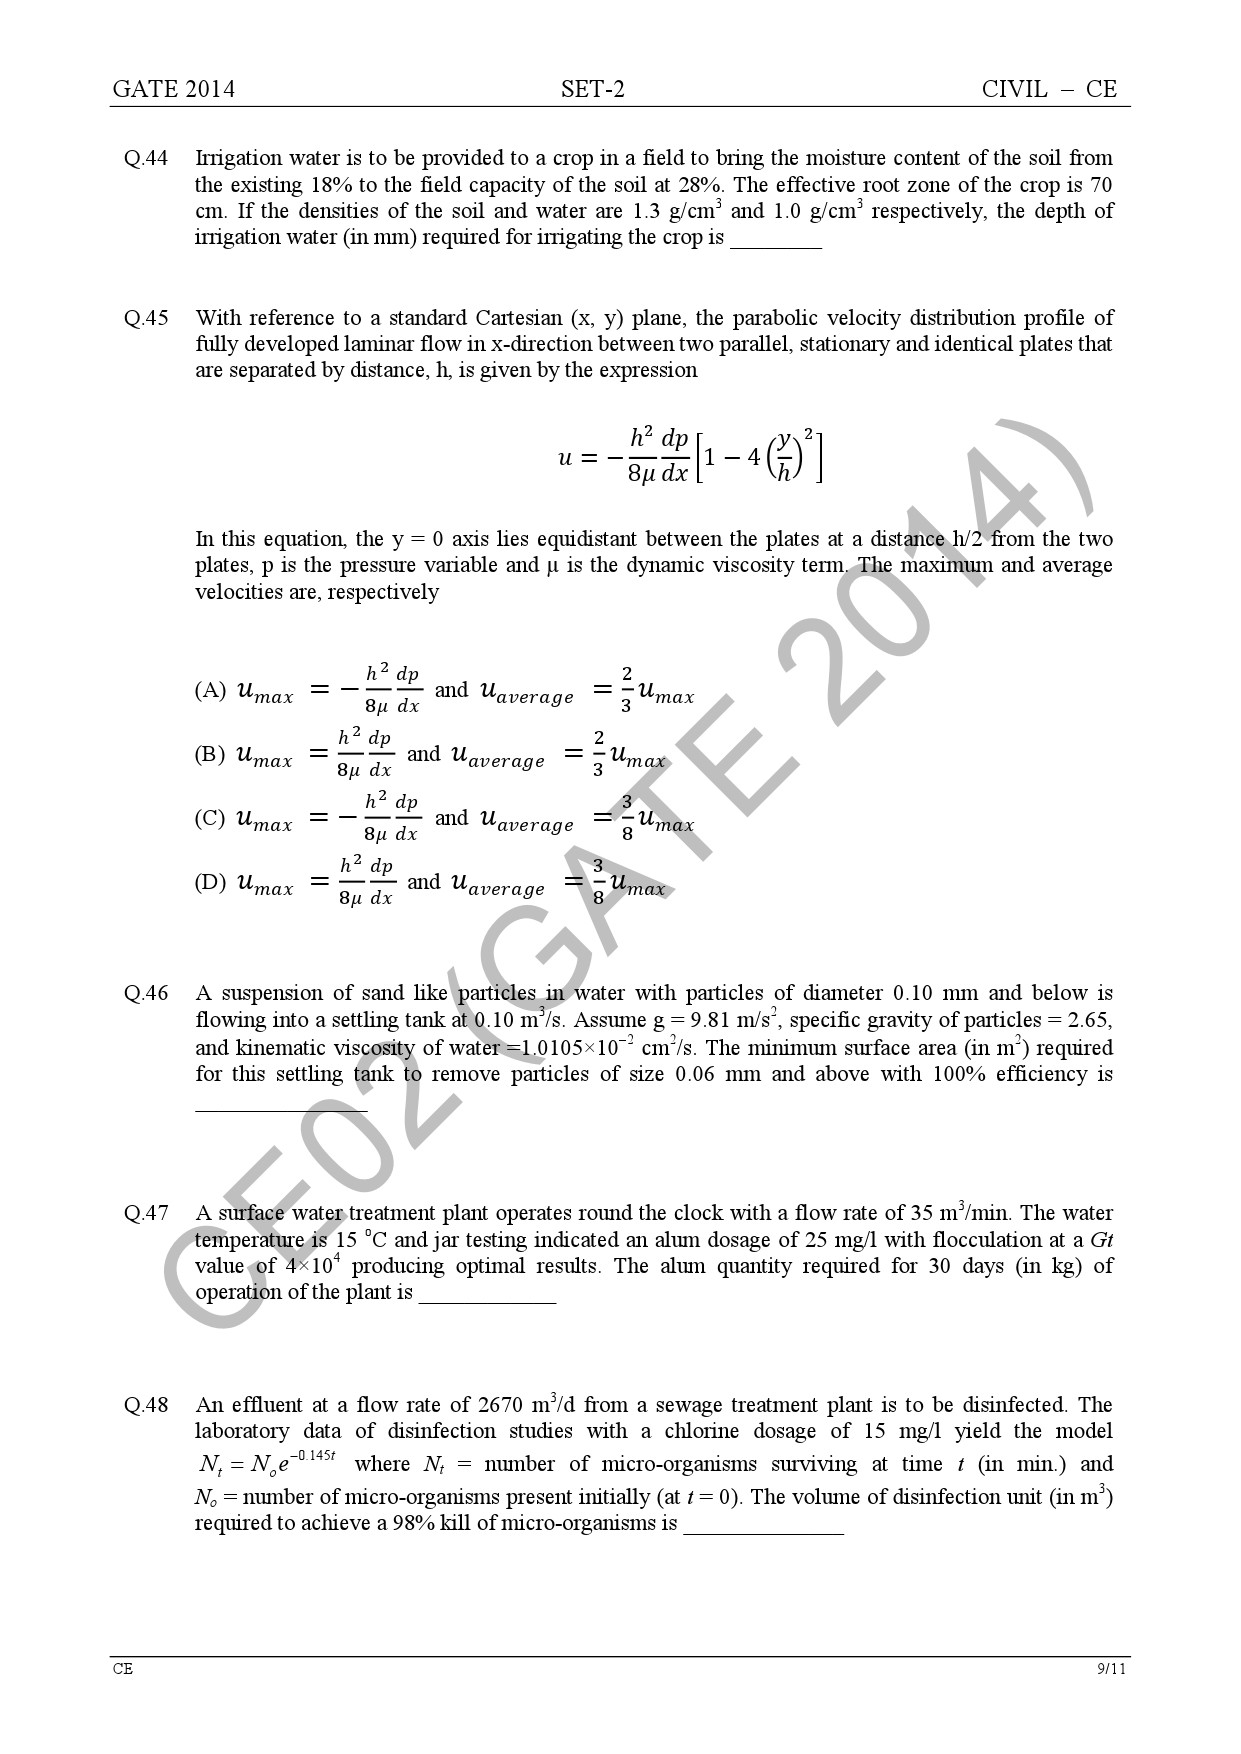 GATE Exam Question Paper 2014 Civil Engineering Set 2 15